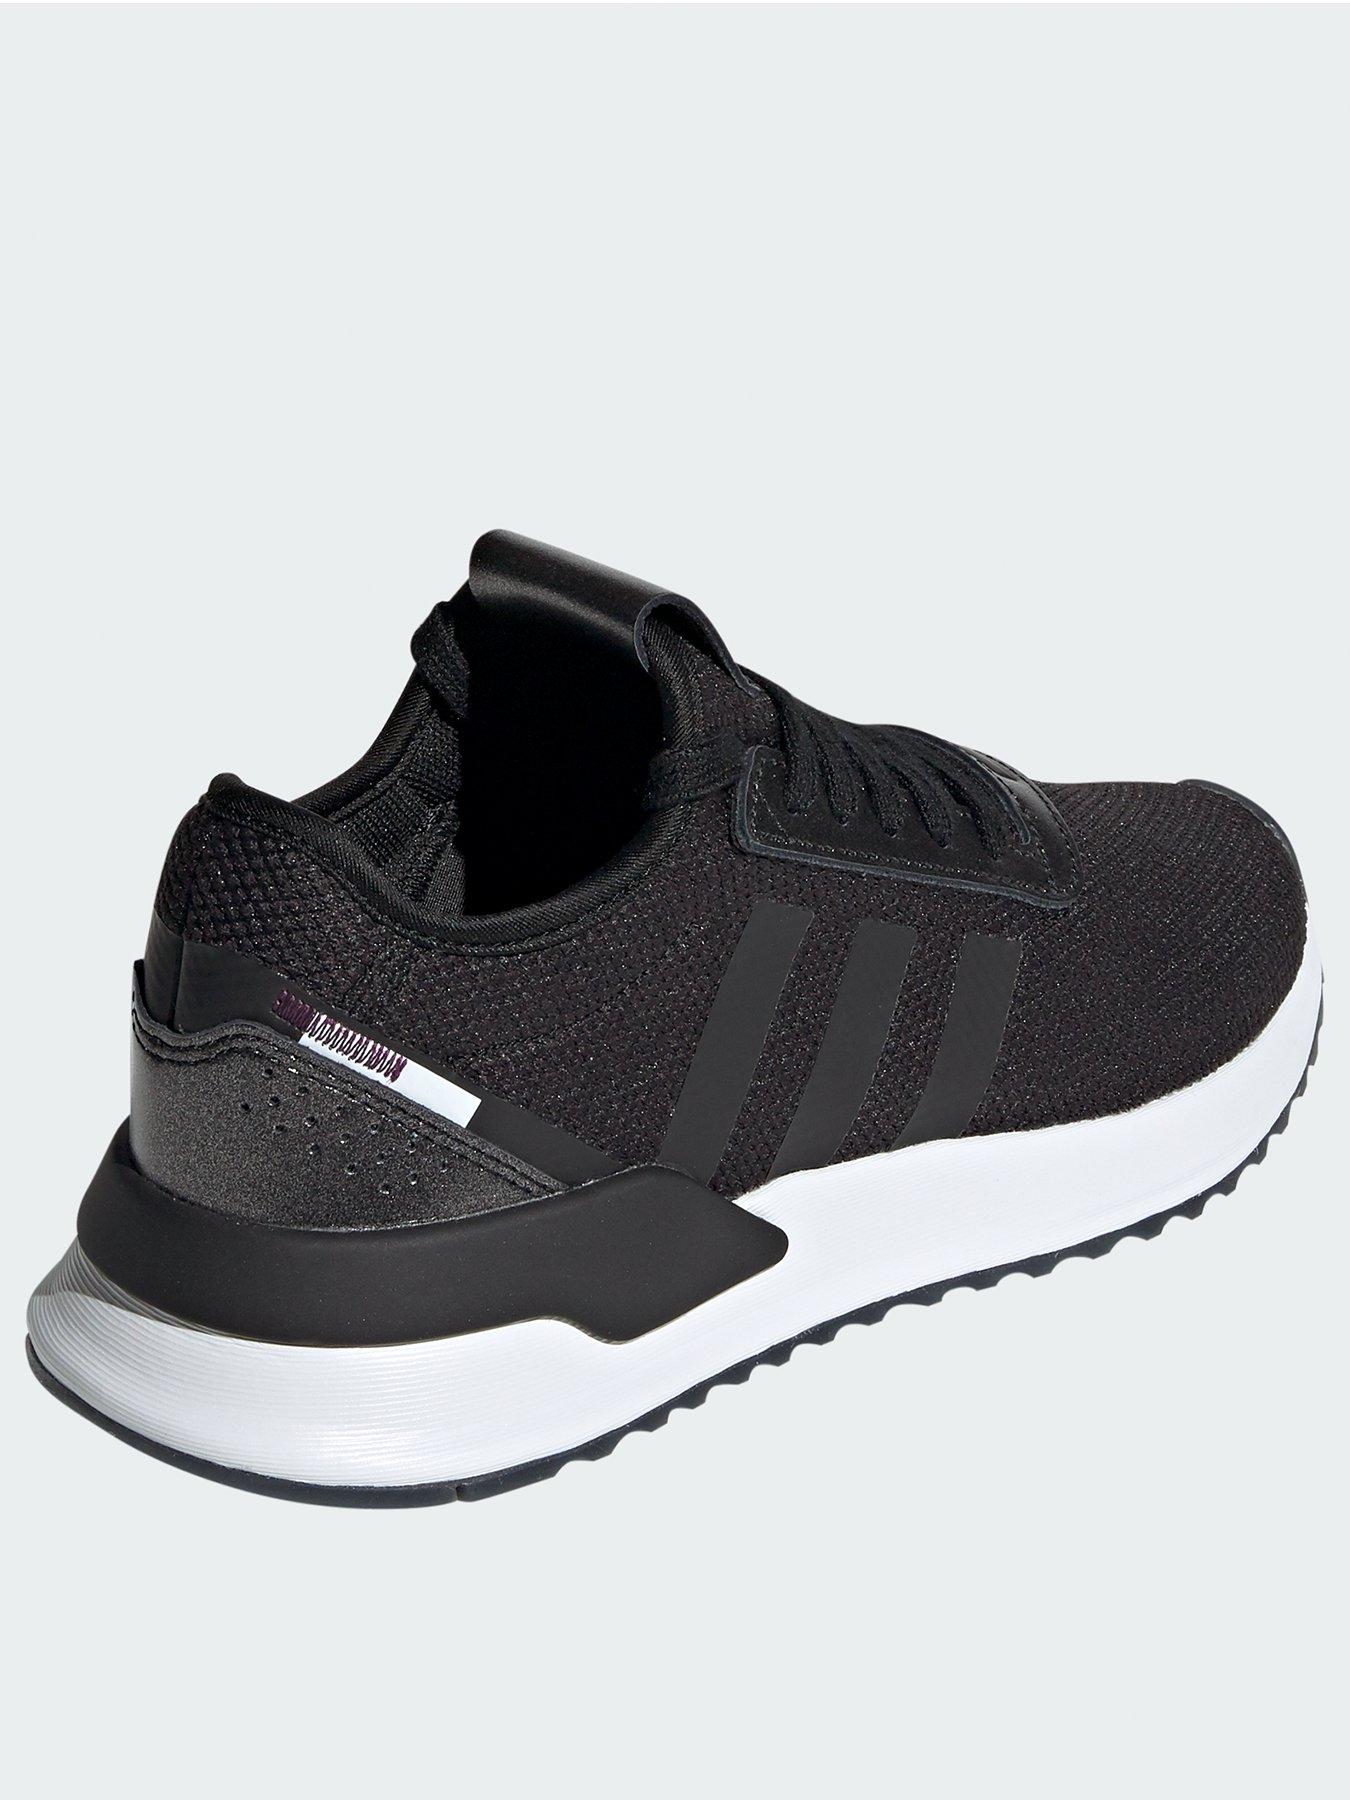 men's adidas originals u_path x running shoes